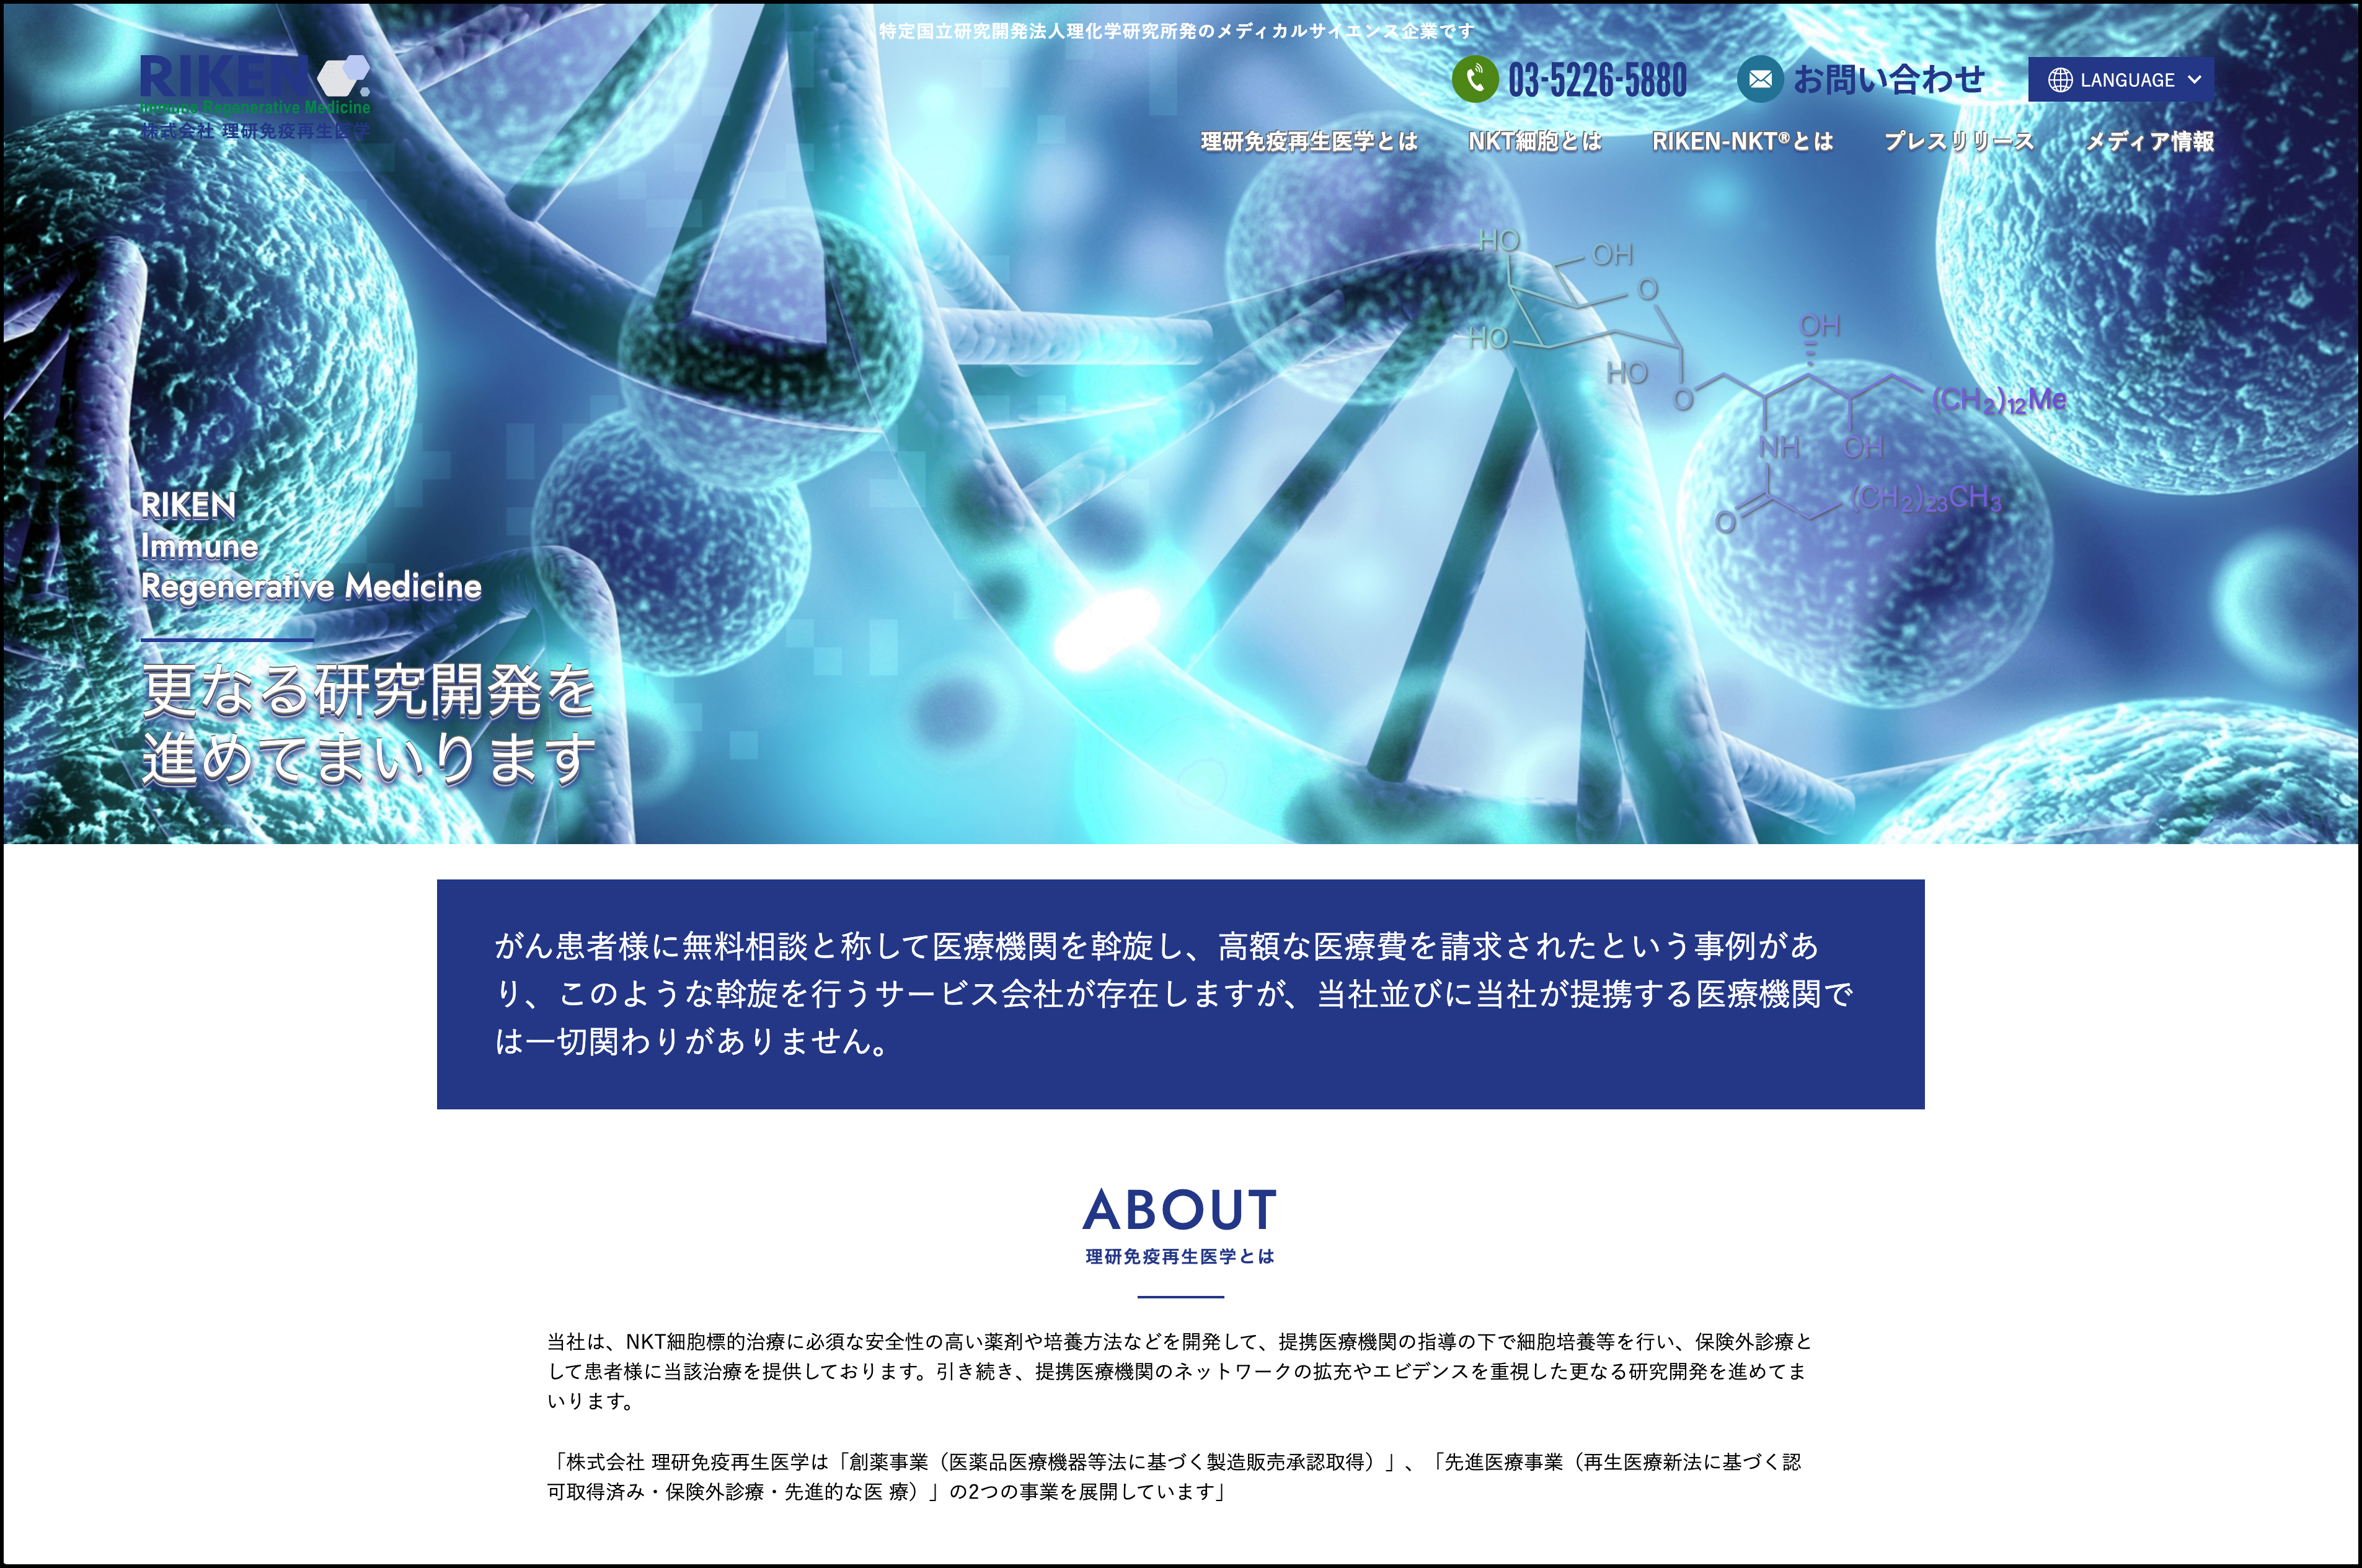 RIKEN 株式会社 理研免疫再生医学 | WEB